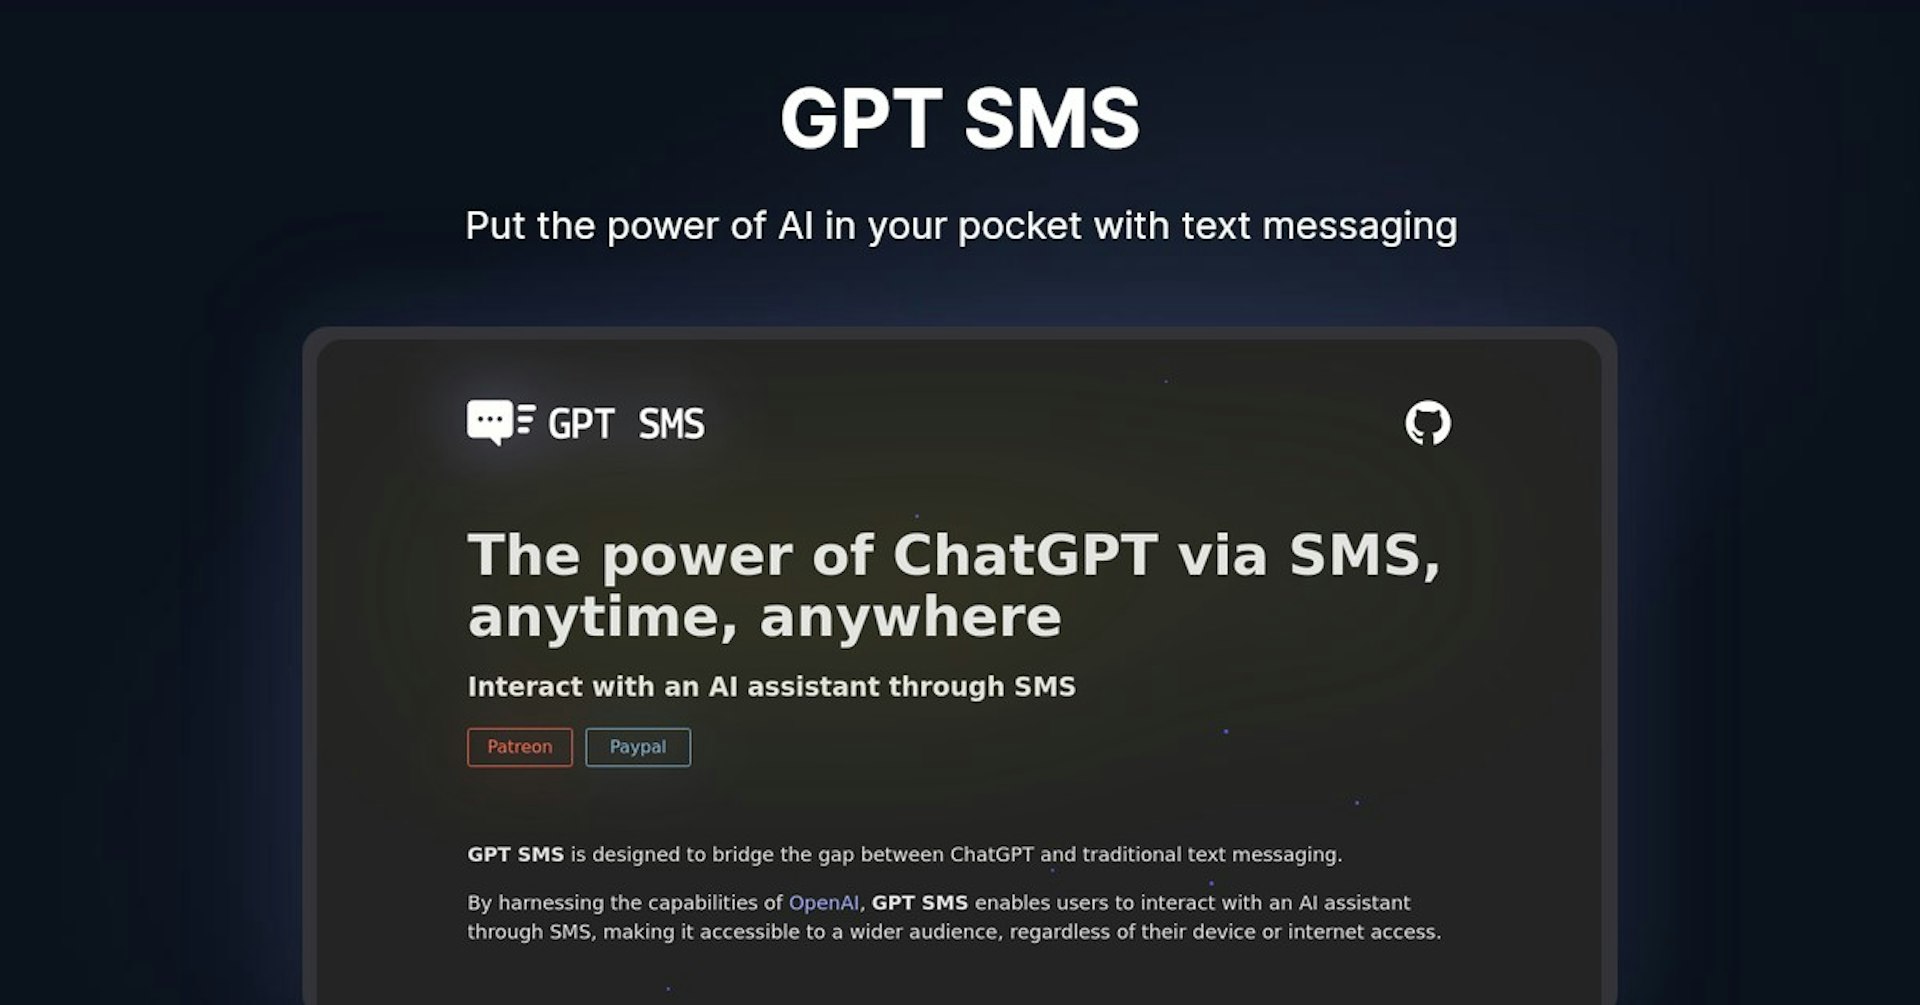 GPT SMS